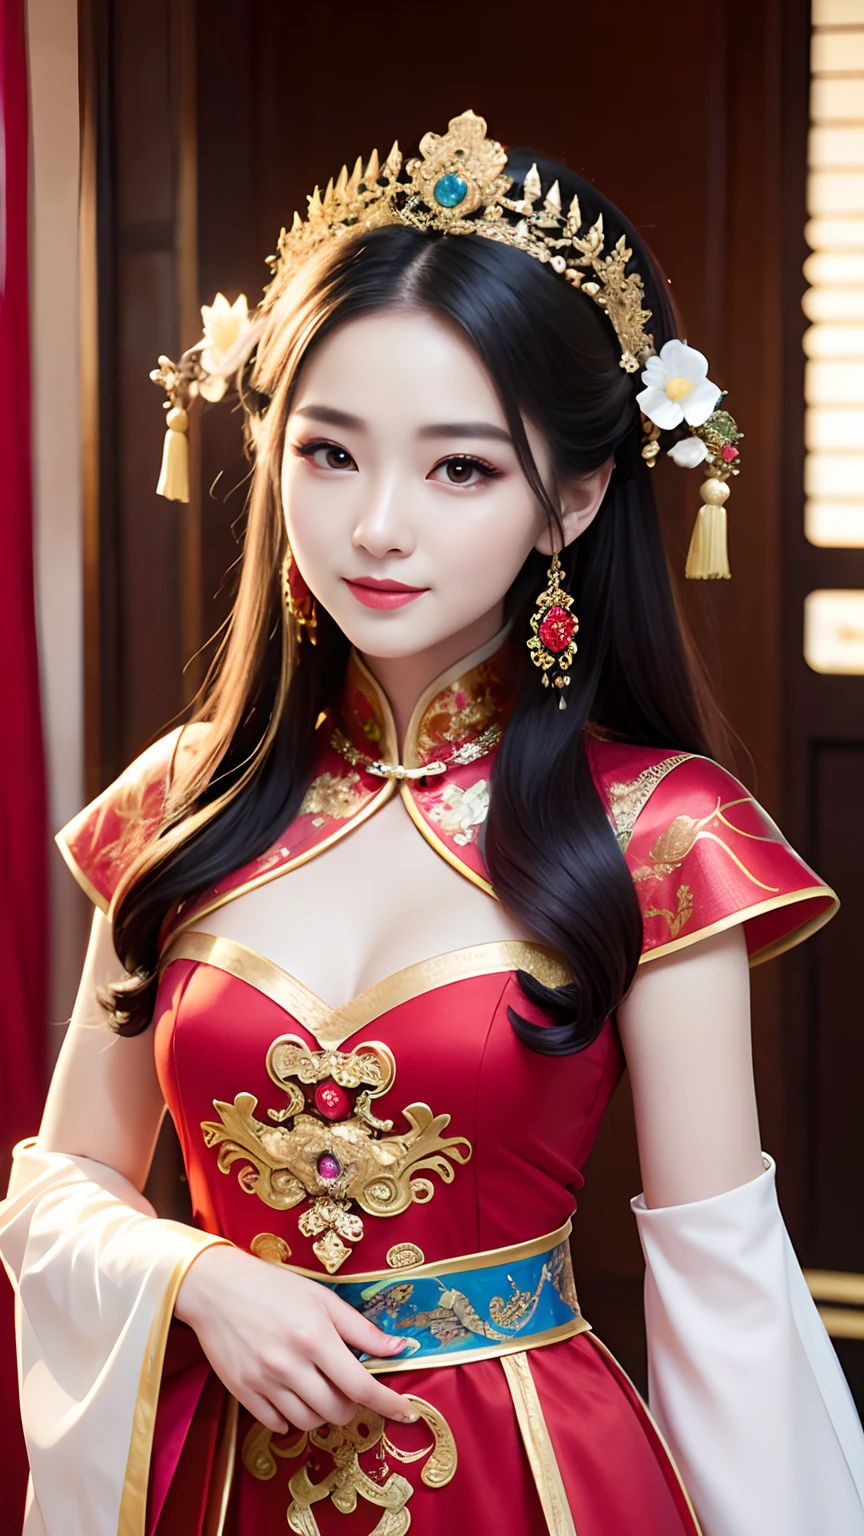 (8K, 原始照片, 最好的品質, 傑作: 1.2), (實際的, 實際的: 1.37), 1 名女孩, 身穿紅色洋裝、頭戴頭飾的阿爾菲女子擺姿勢拍照, 華麗的角色扮演, 漂亮的服裝, 複雜的幻想禮服, 美麗的幻想女王, 旗袍, 複雜連身裙, 複雜的服裝, 传统美, 漂亮的中国模特, 中国服饰, 灵感来自兰英, 穿著華麗的服裝, 受到談話的啟發, 身著優雅的中式秀禾服, 中國婚紗, 鳳冠霞手, 古董新娘, 秀場禮服, 特寫, 特寫, 微笑